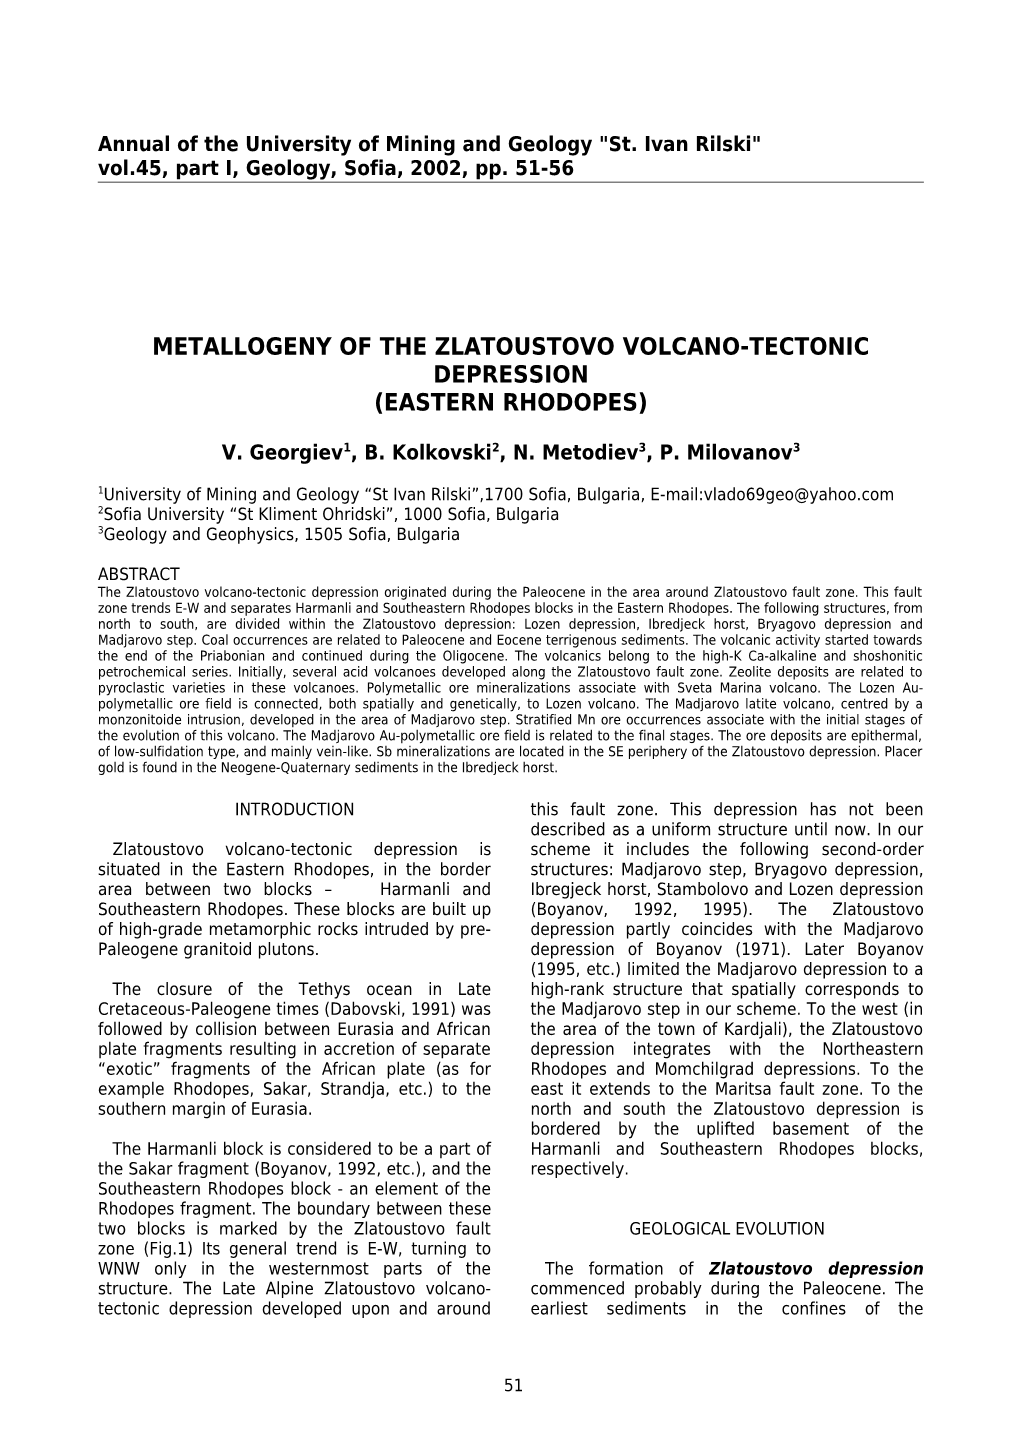 Metallogeny of the Zlatoustovo Volcano-Tectonic Depression